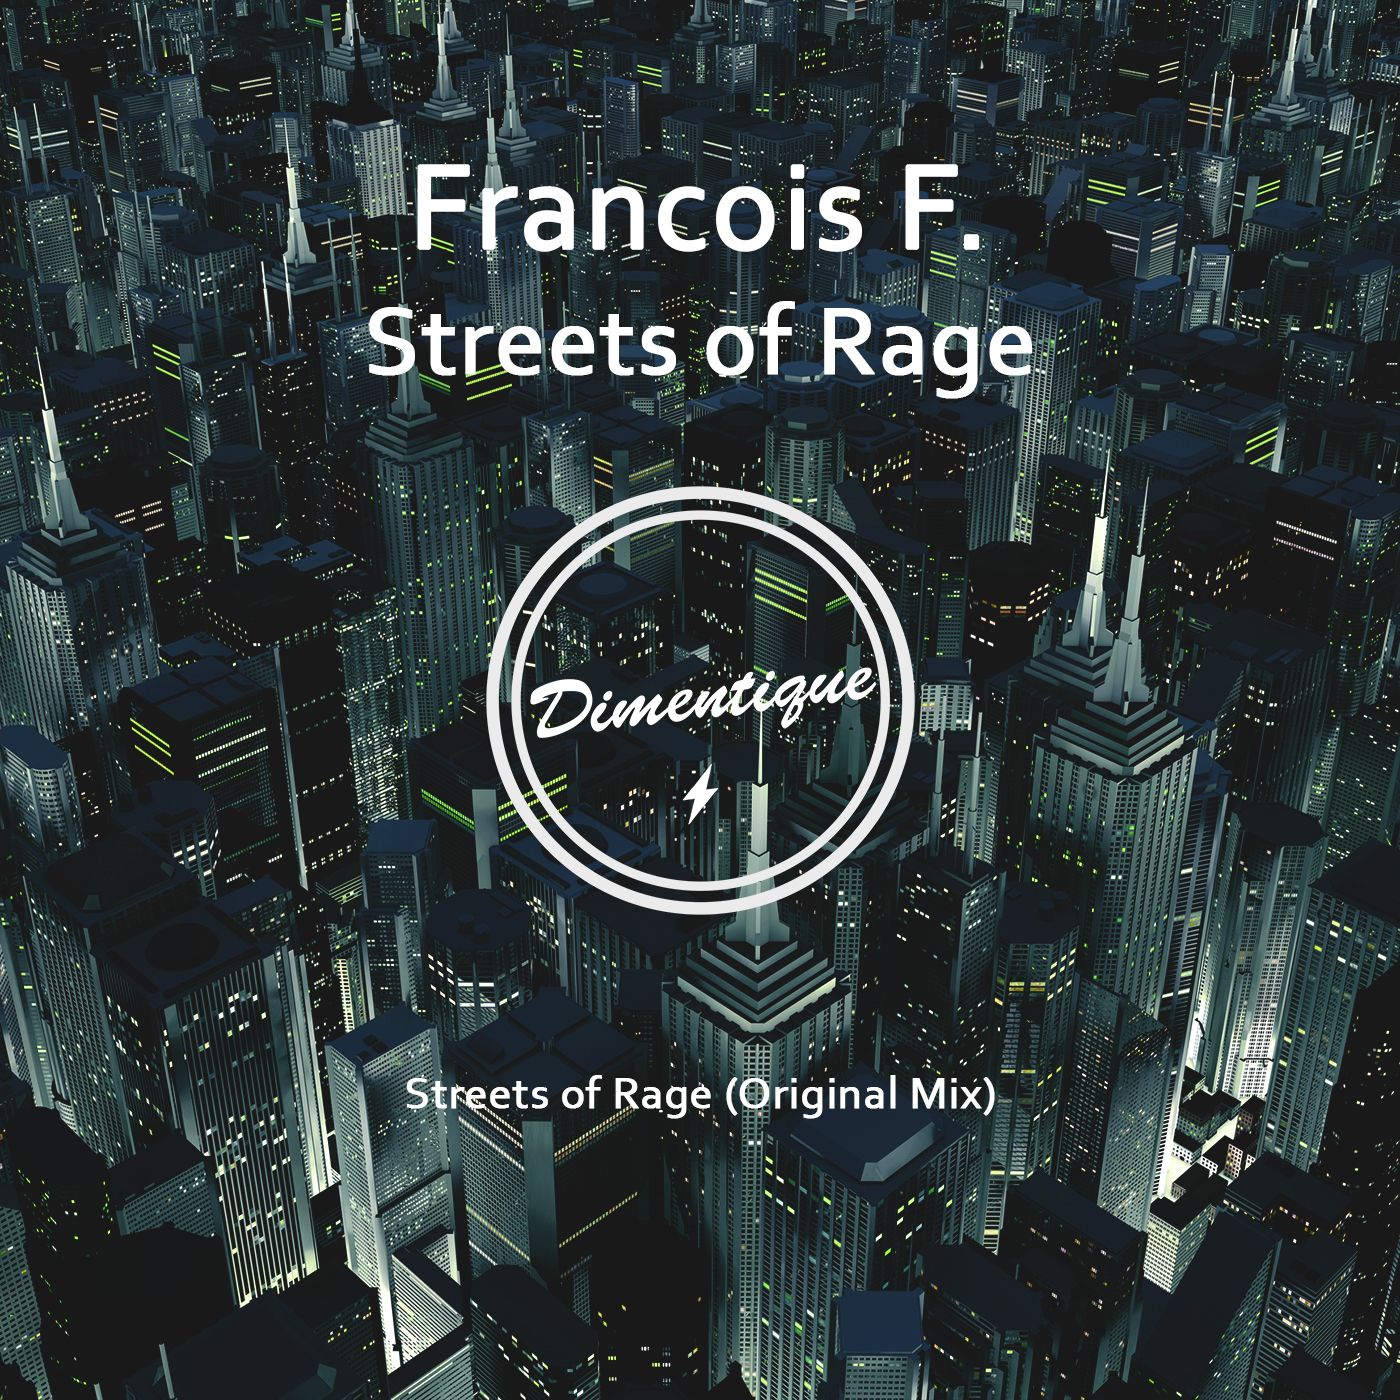 dimentique_new_art_2016_francois_f_streets_of_rage_2.jpg